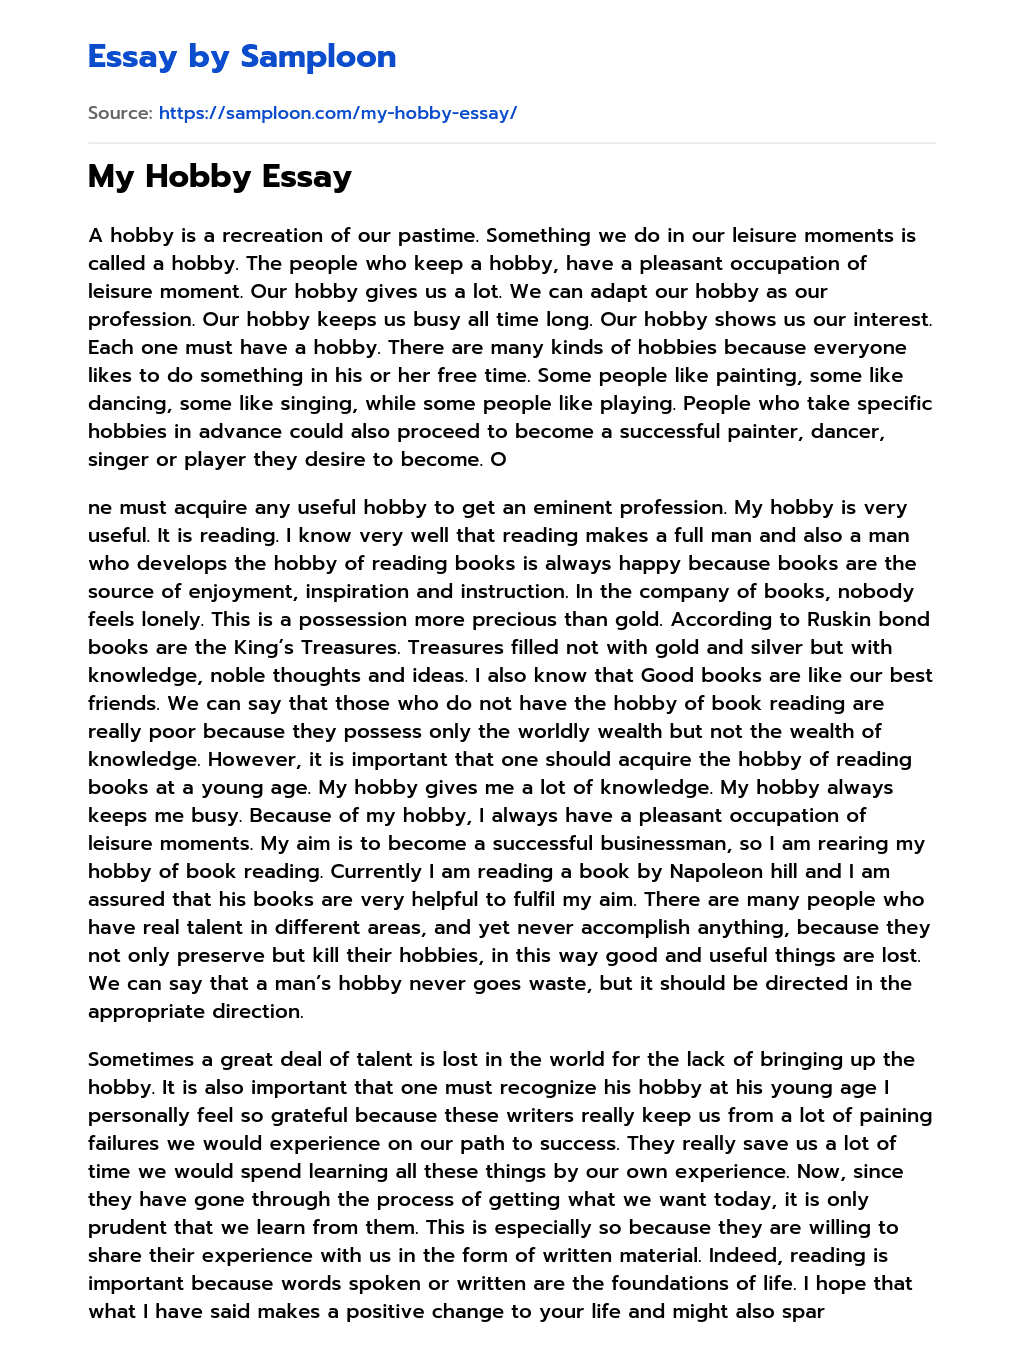 my hobby game essay